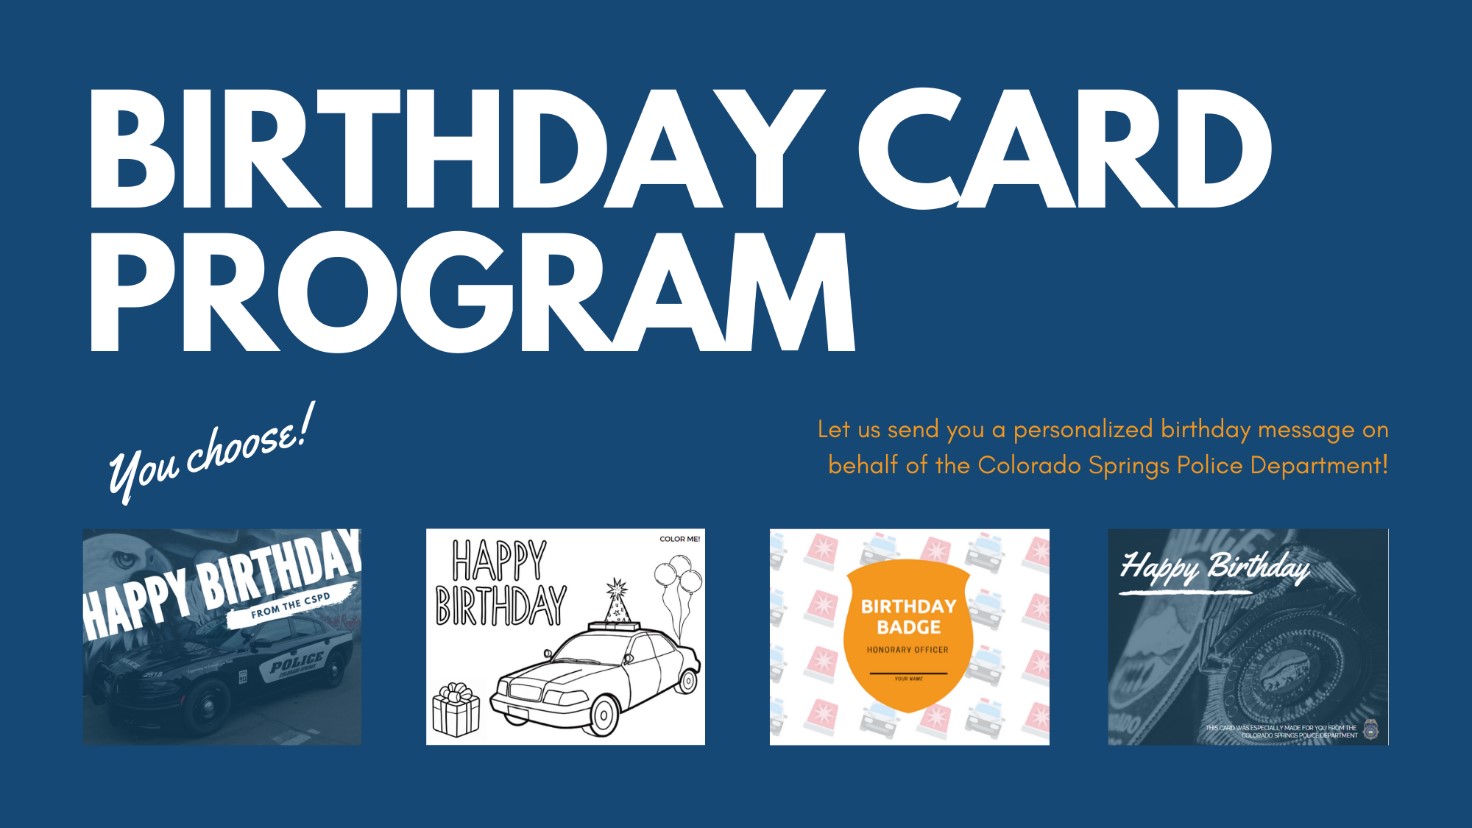 Birthday Card Program image